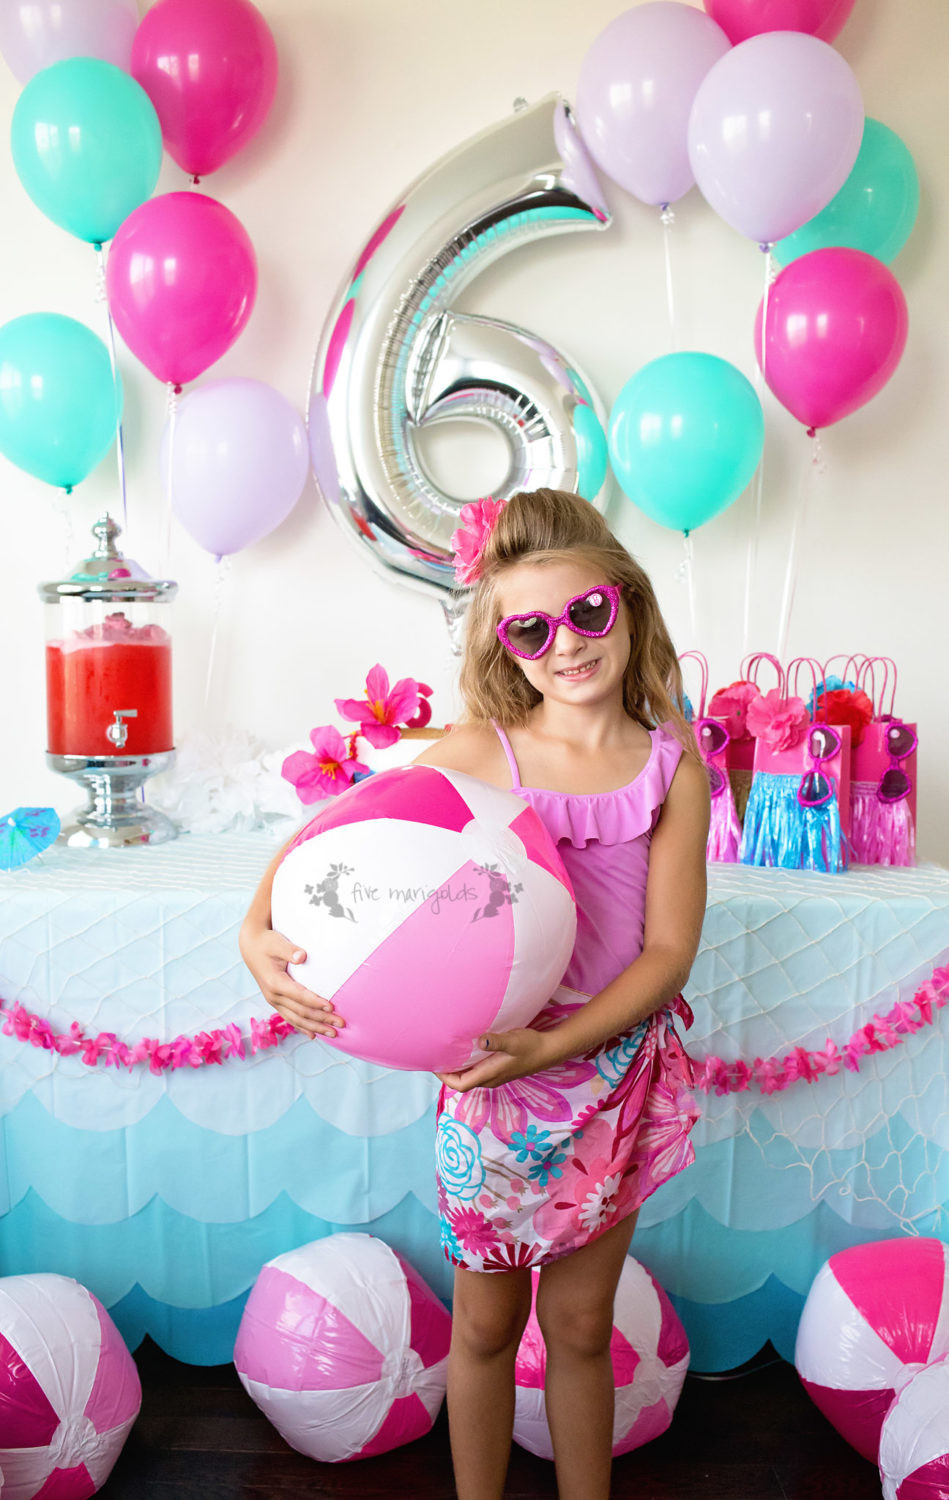 Barbie Beach Party Ideas
 Malibu Barbie Pool Party Under $50 Five Marigolds